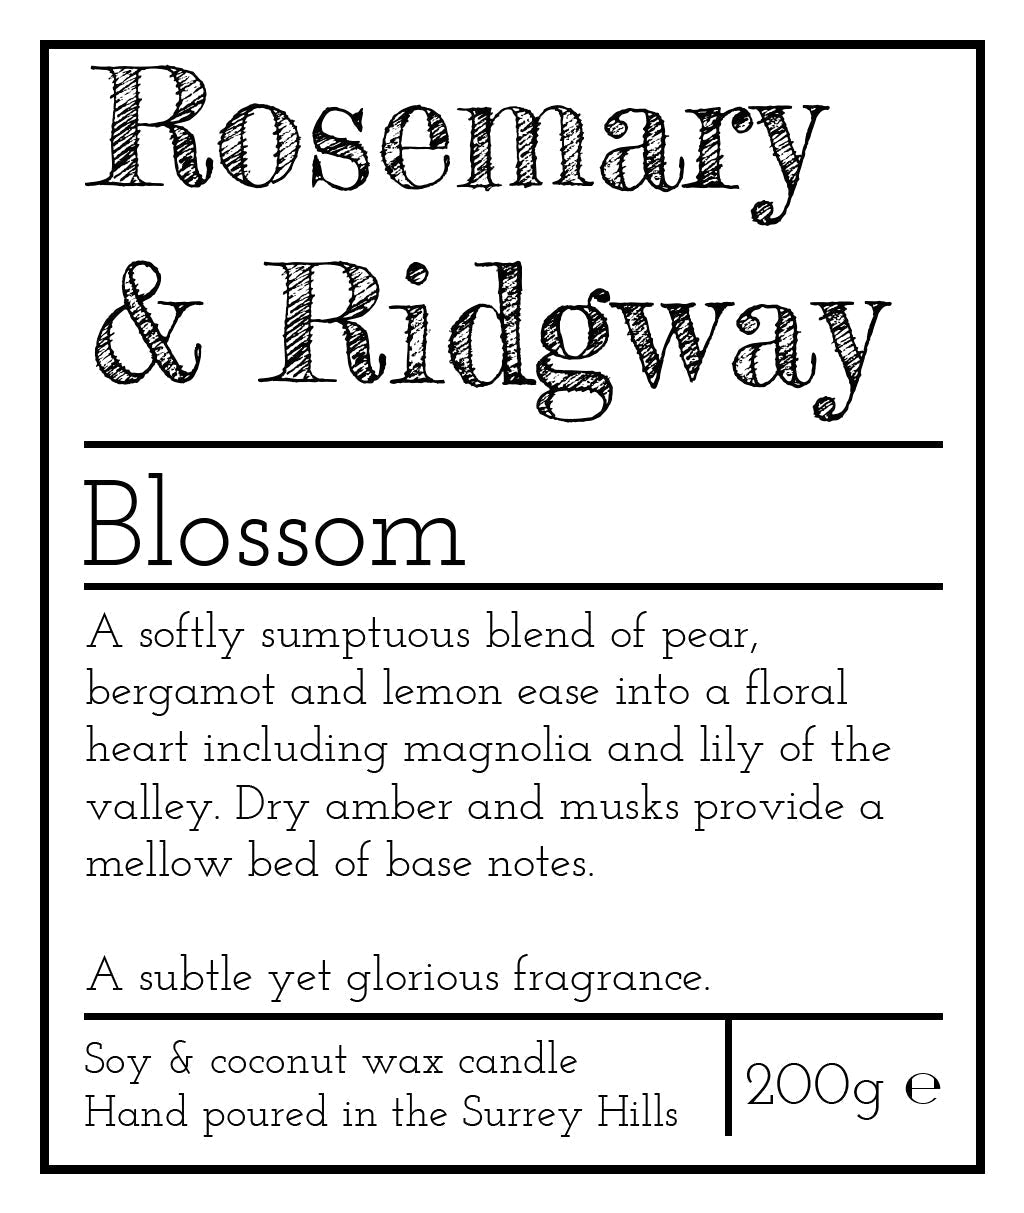 Blossom Rosemary & Ridgway